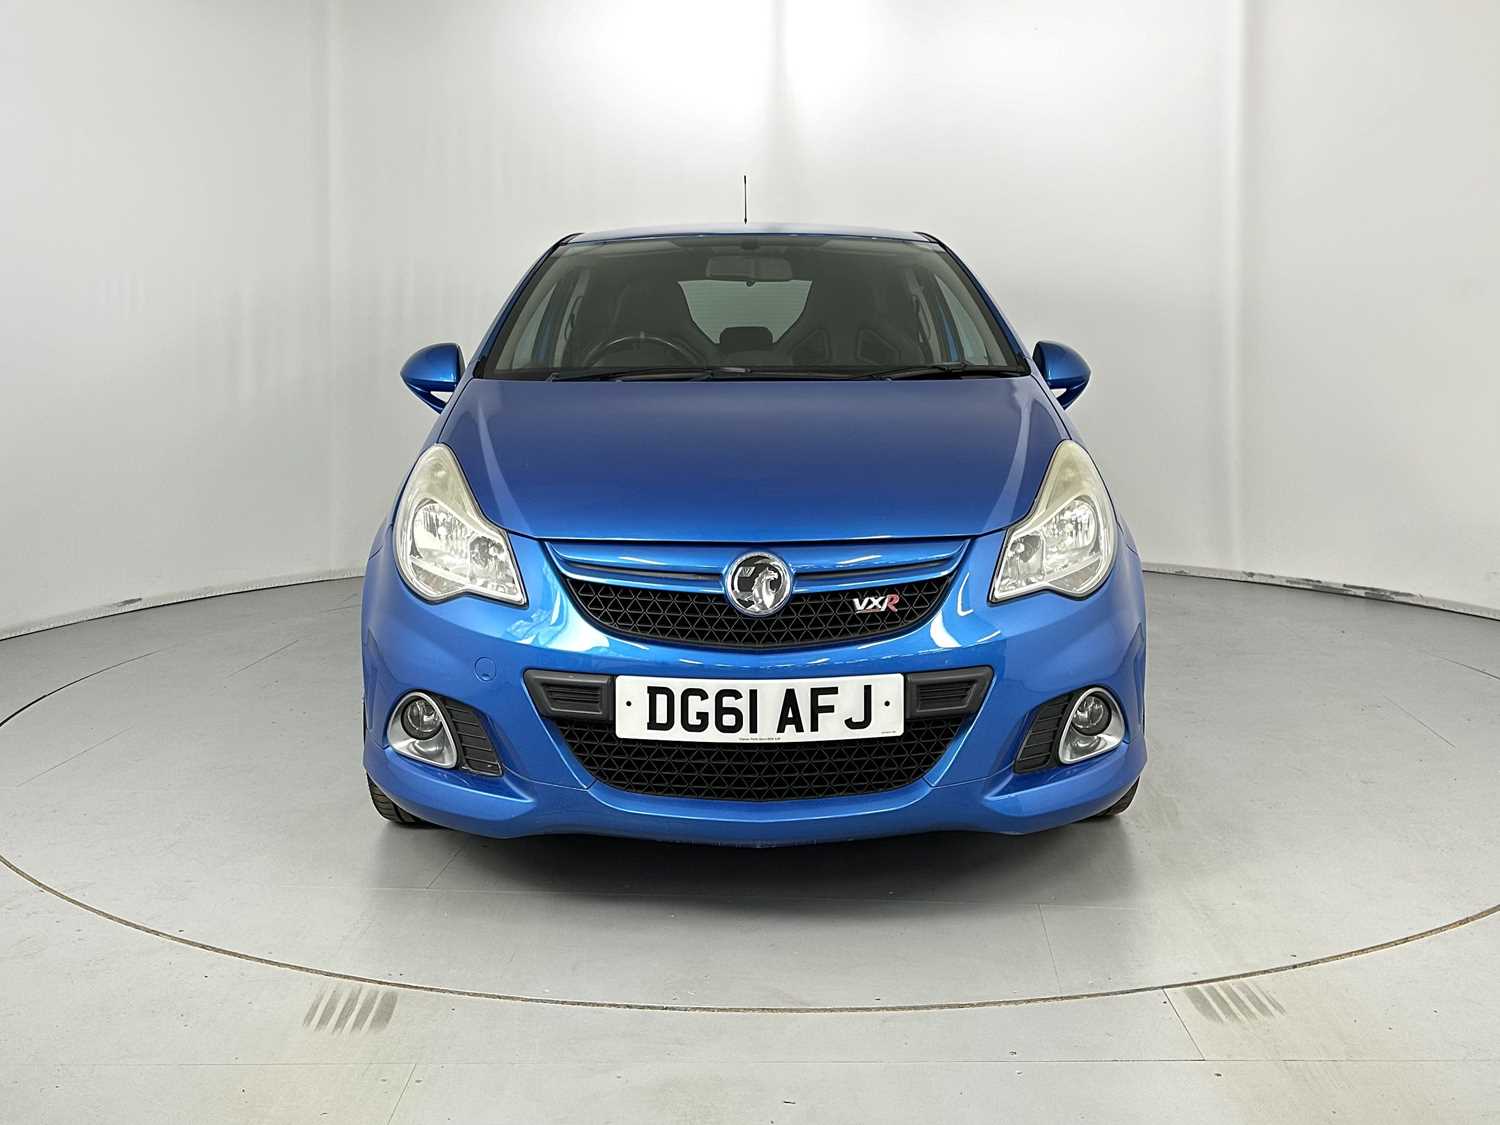 2011 Vauxhall Corsa VXR Rare Blue Edition - Image 2 of 29